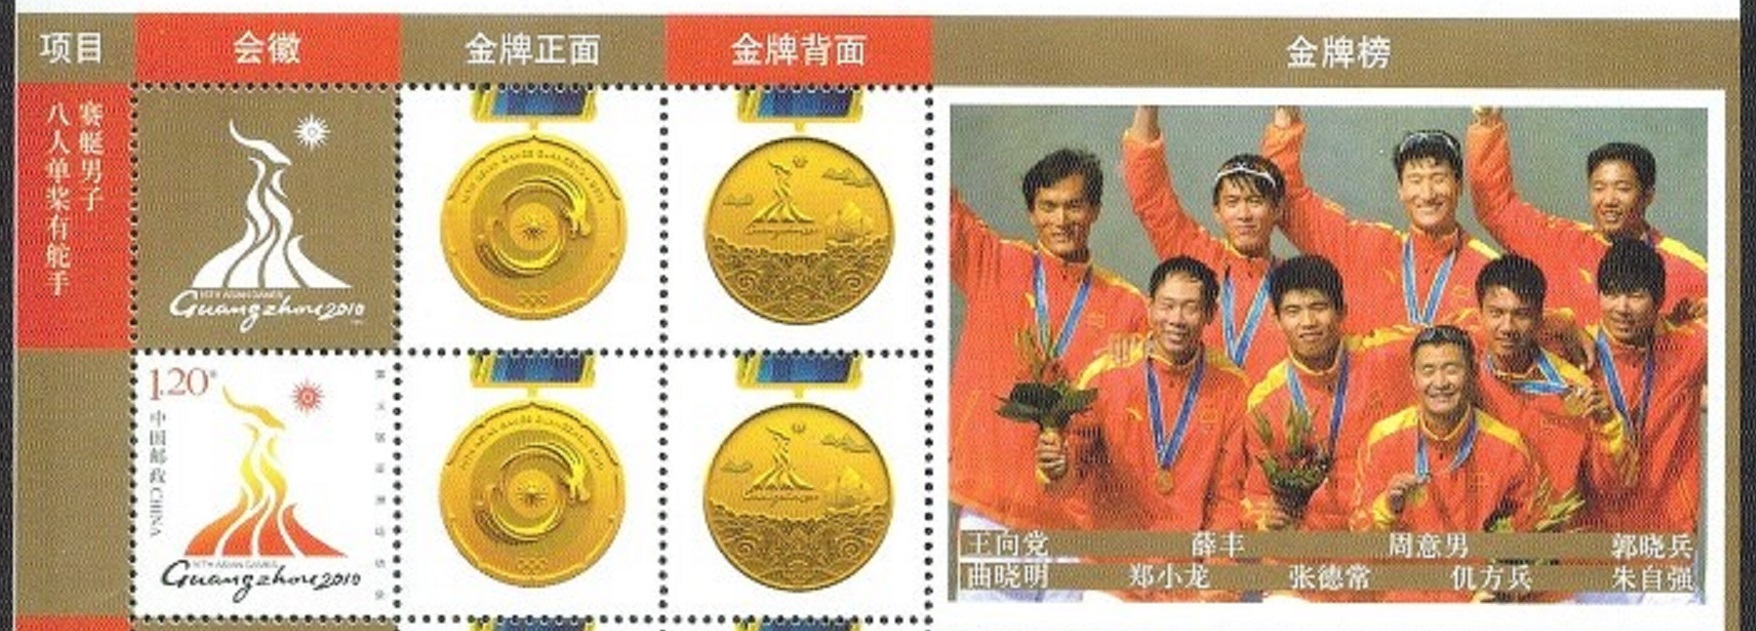 Stamp CHN 2009 2010 16th Asian Games Guangzhou 2010 M8 crew